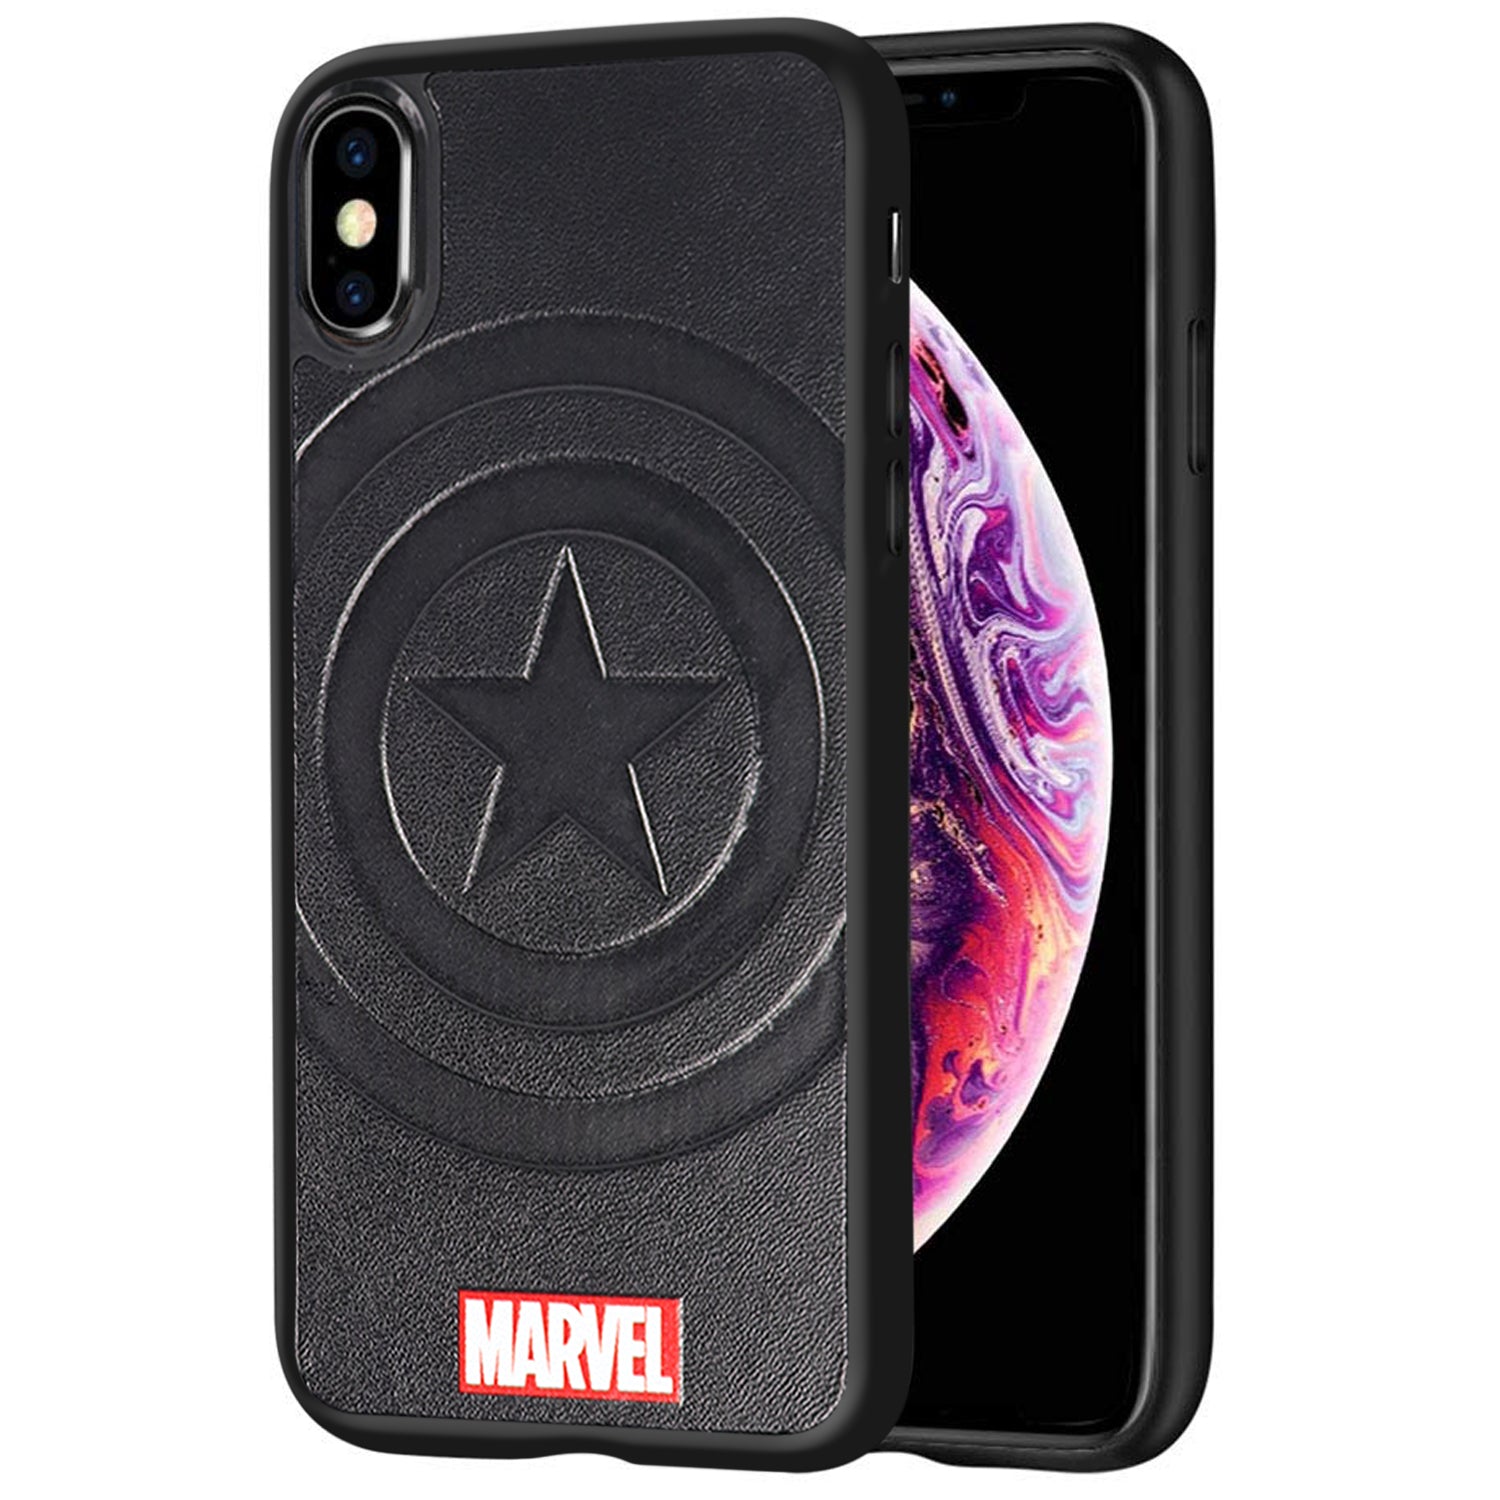 Captain America shield iPhone case - PTC Phone Accessories